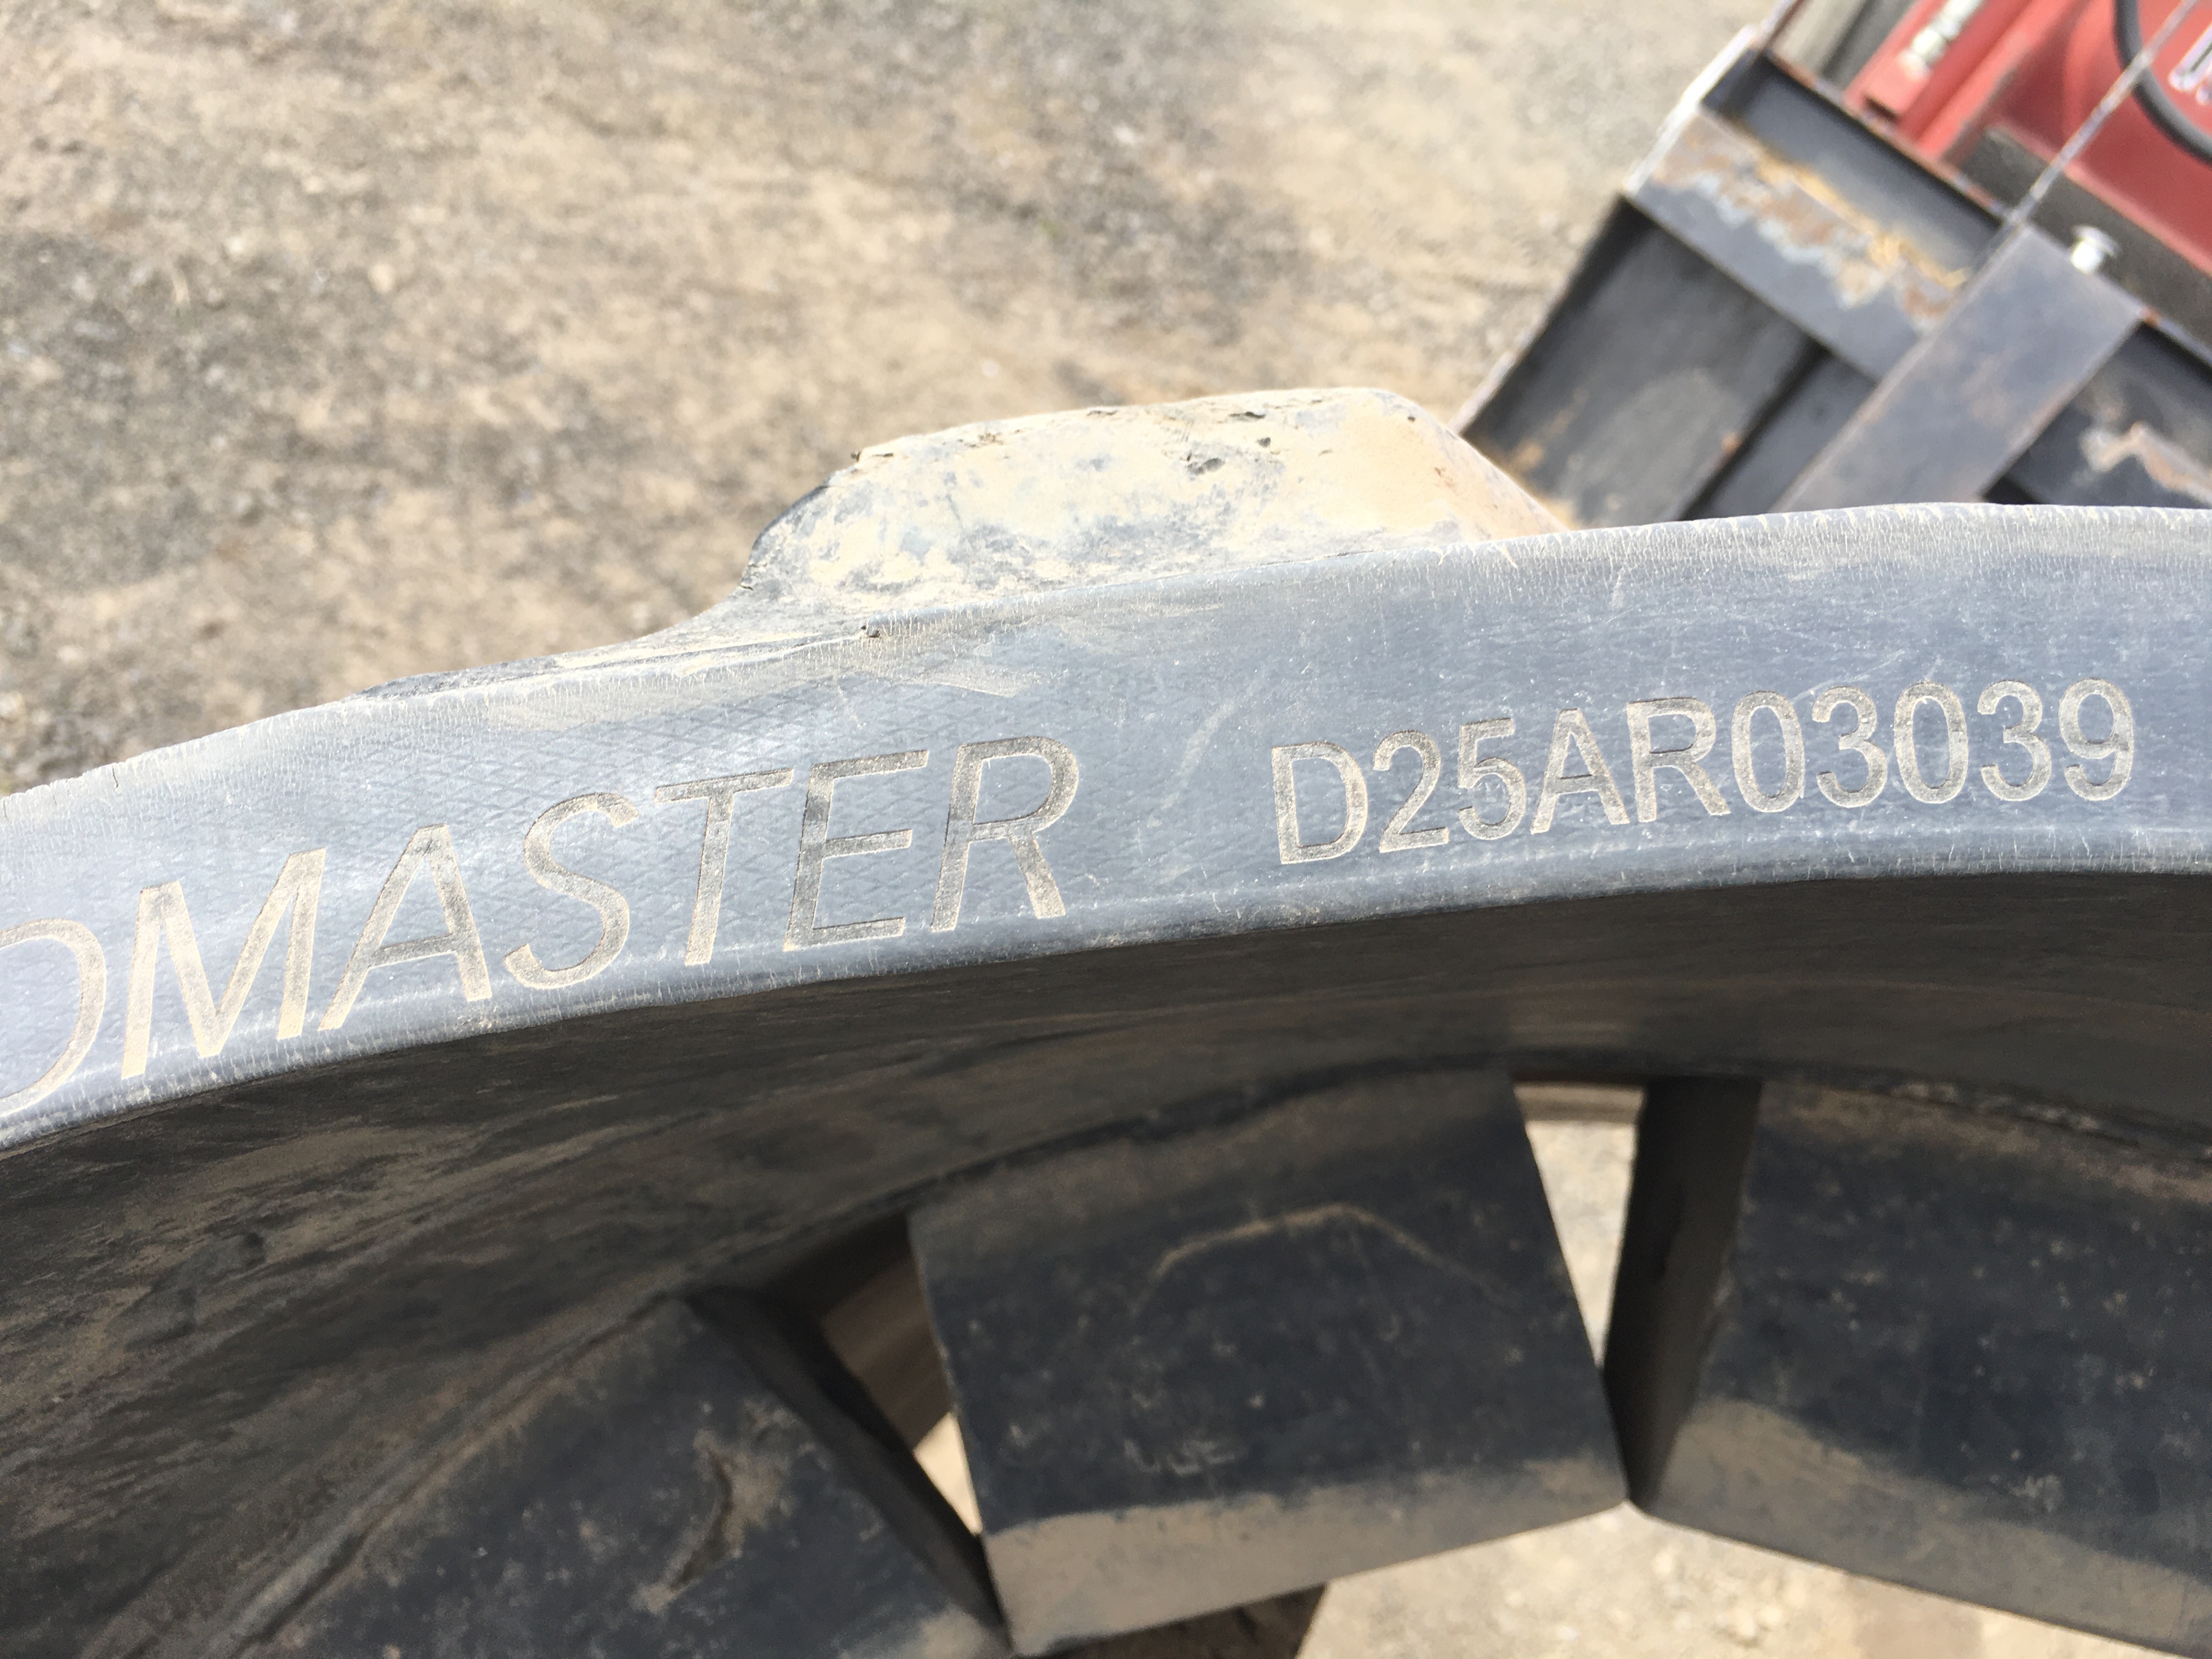 Yieldmaster Used 25" Agco MT700 track